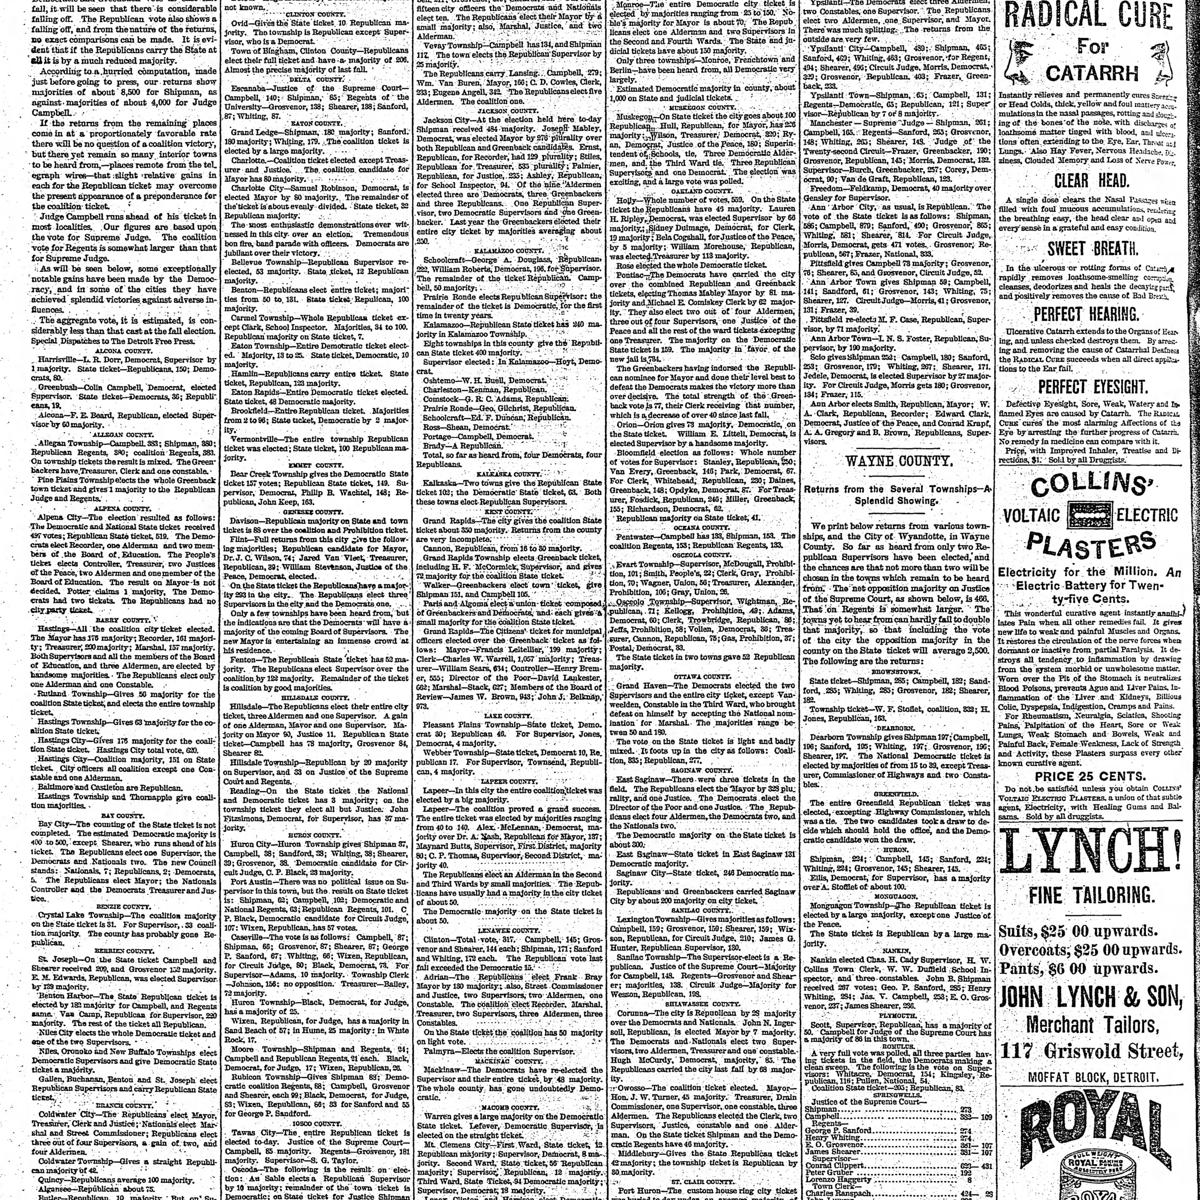 The Detroit Free Press, 1879-04-08, page 8